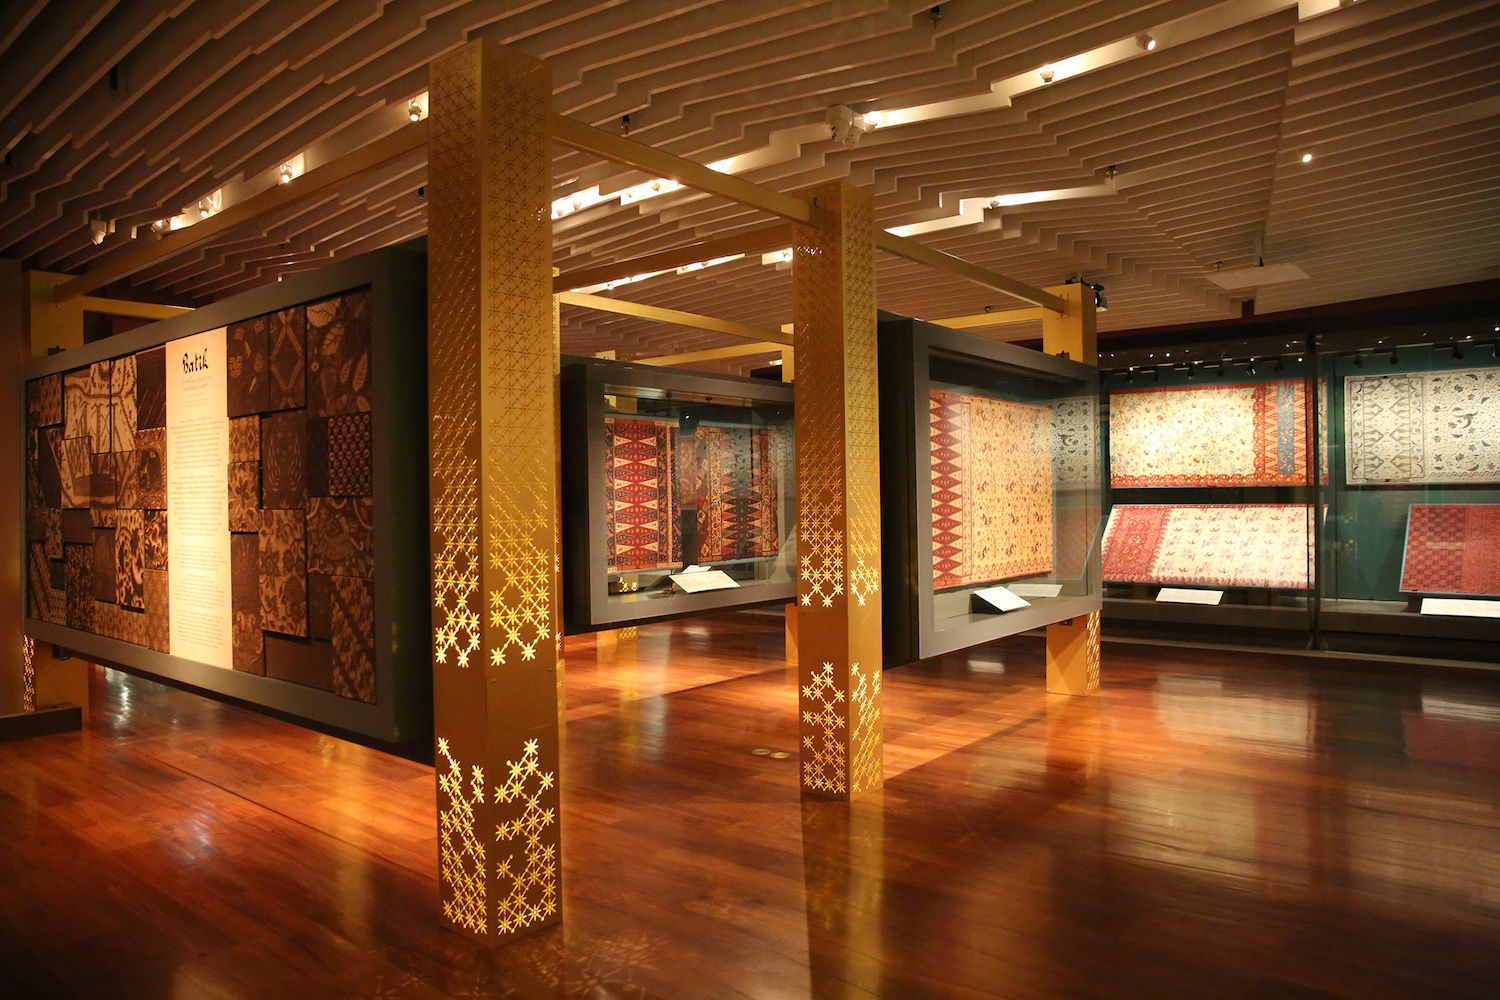 View King Chulalongkorn’s Personal Batik Collection at this Exhibition